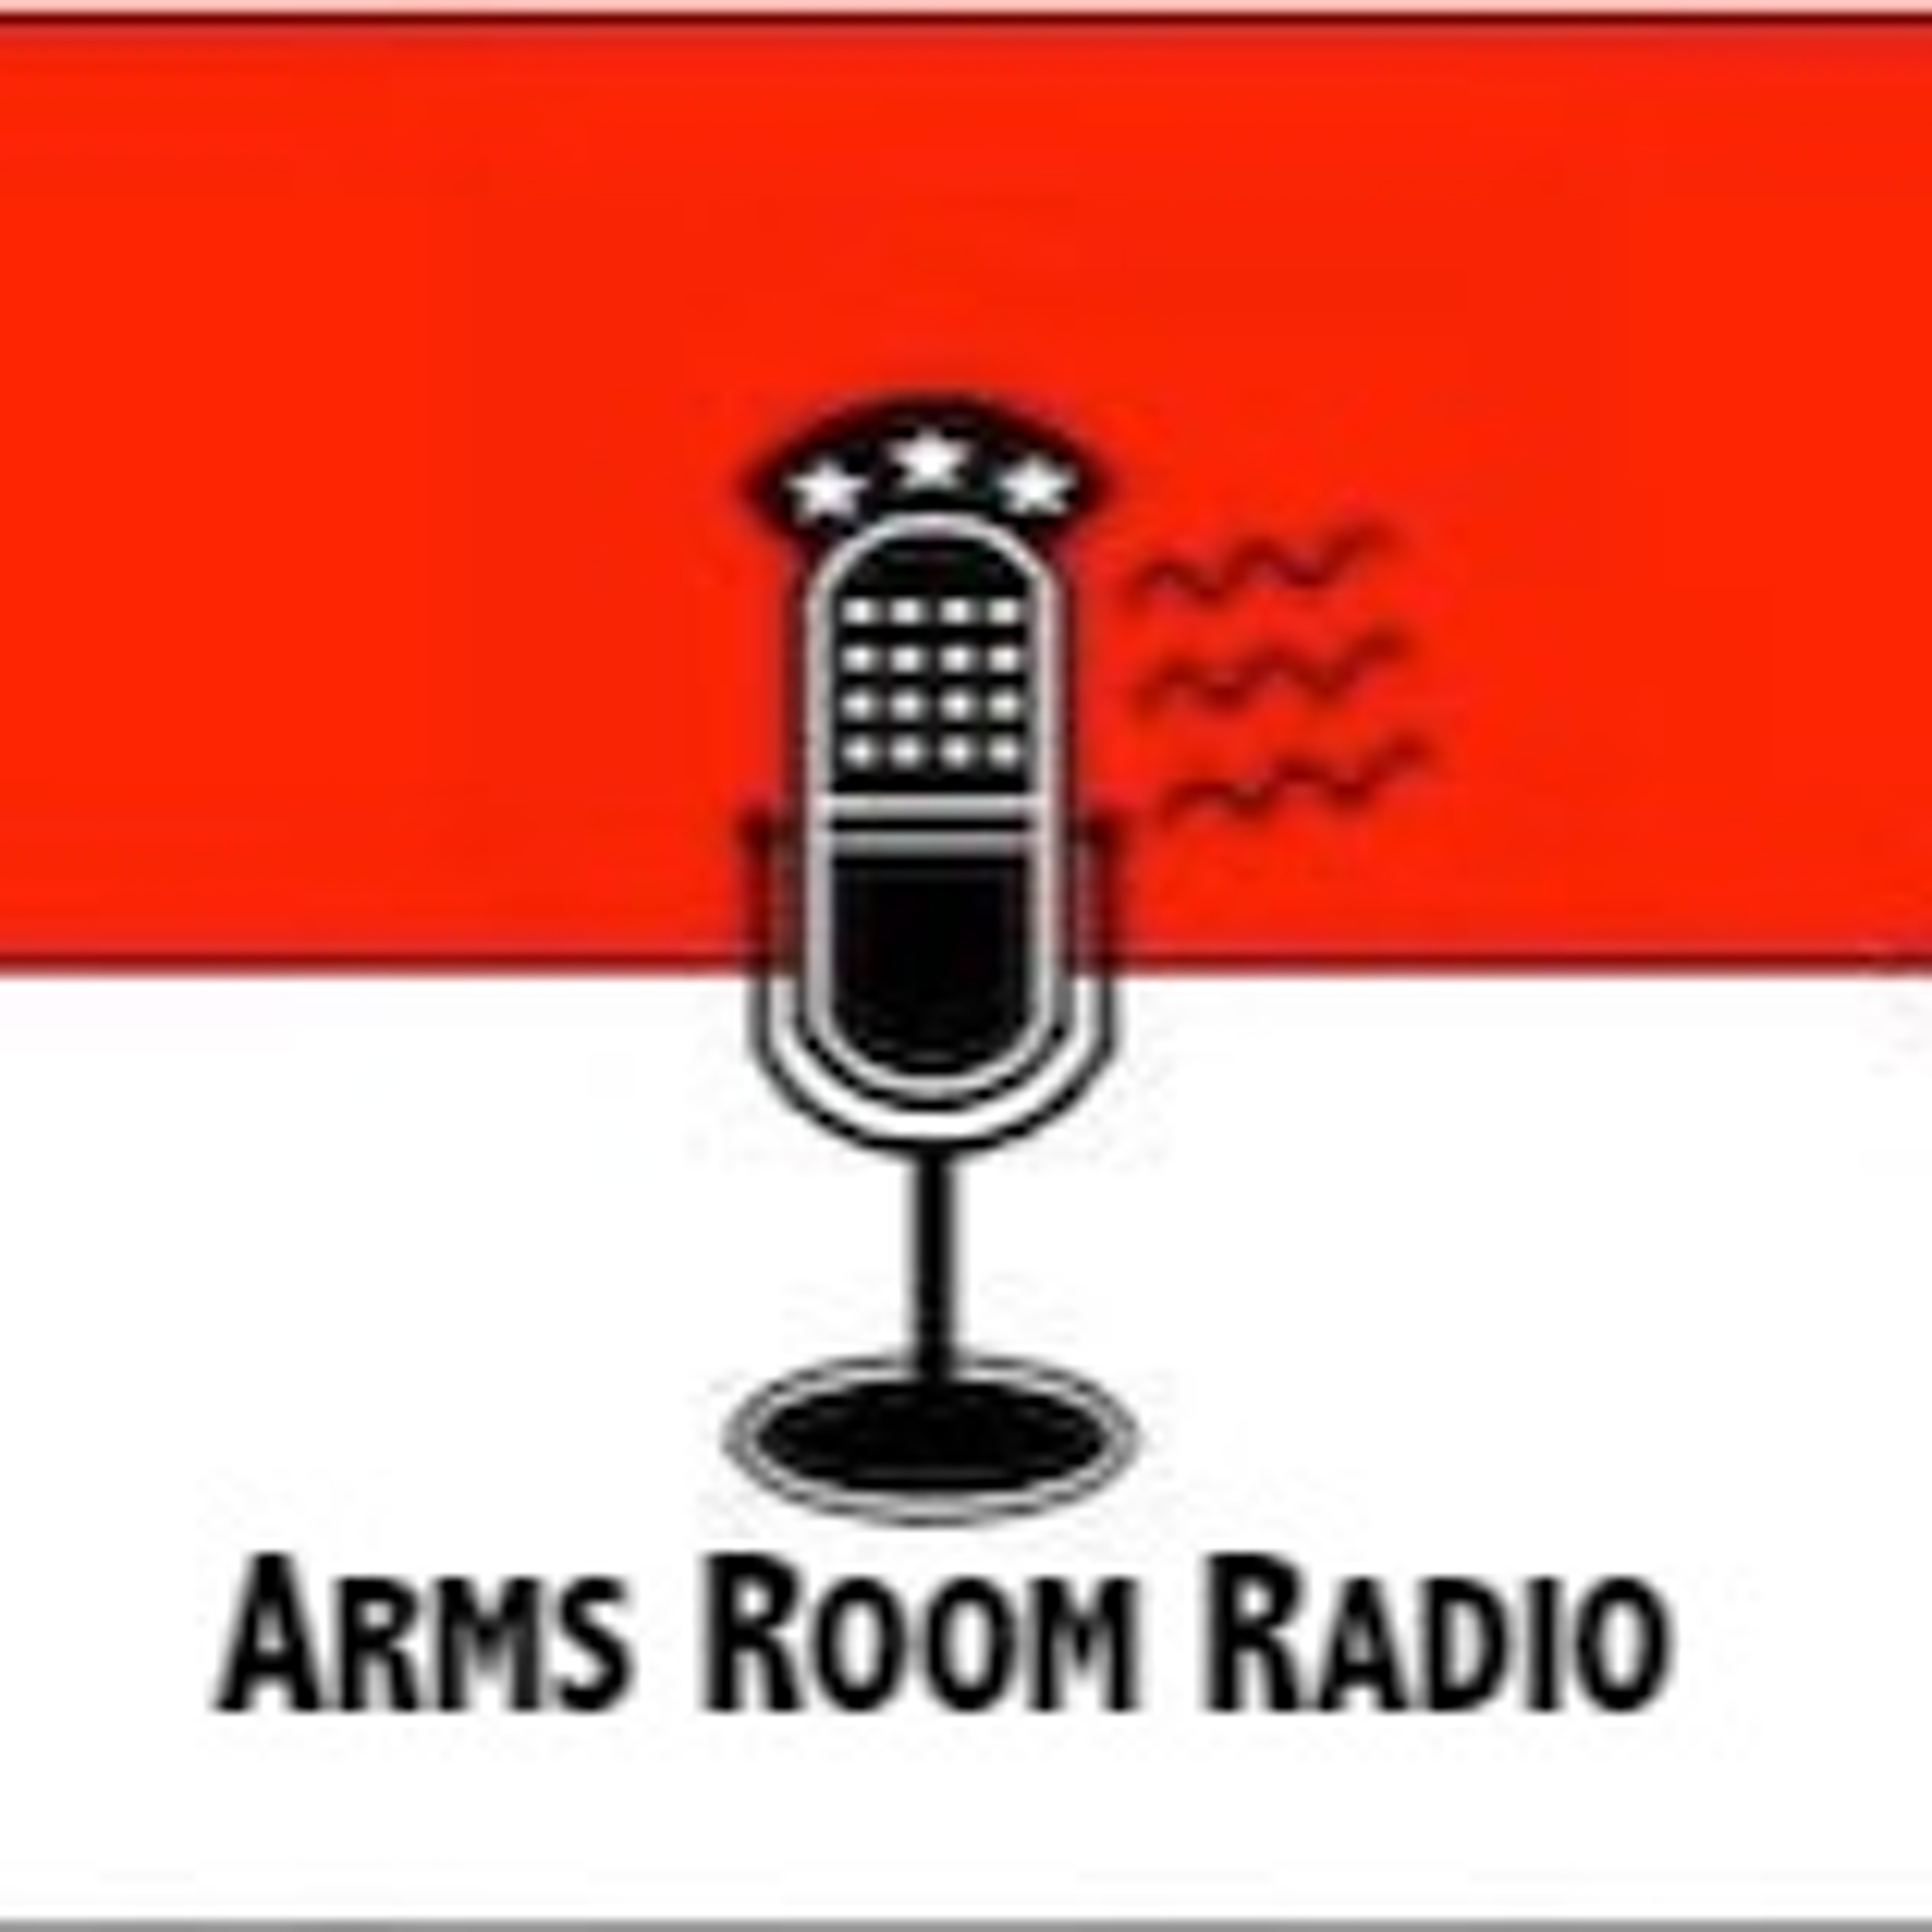 ArmsRoomRadio 11.21.20 Todd Fossey on new gun owner drills